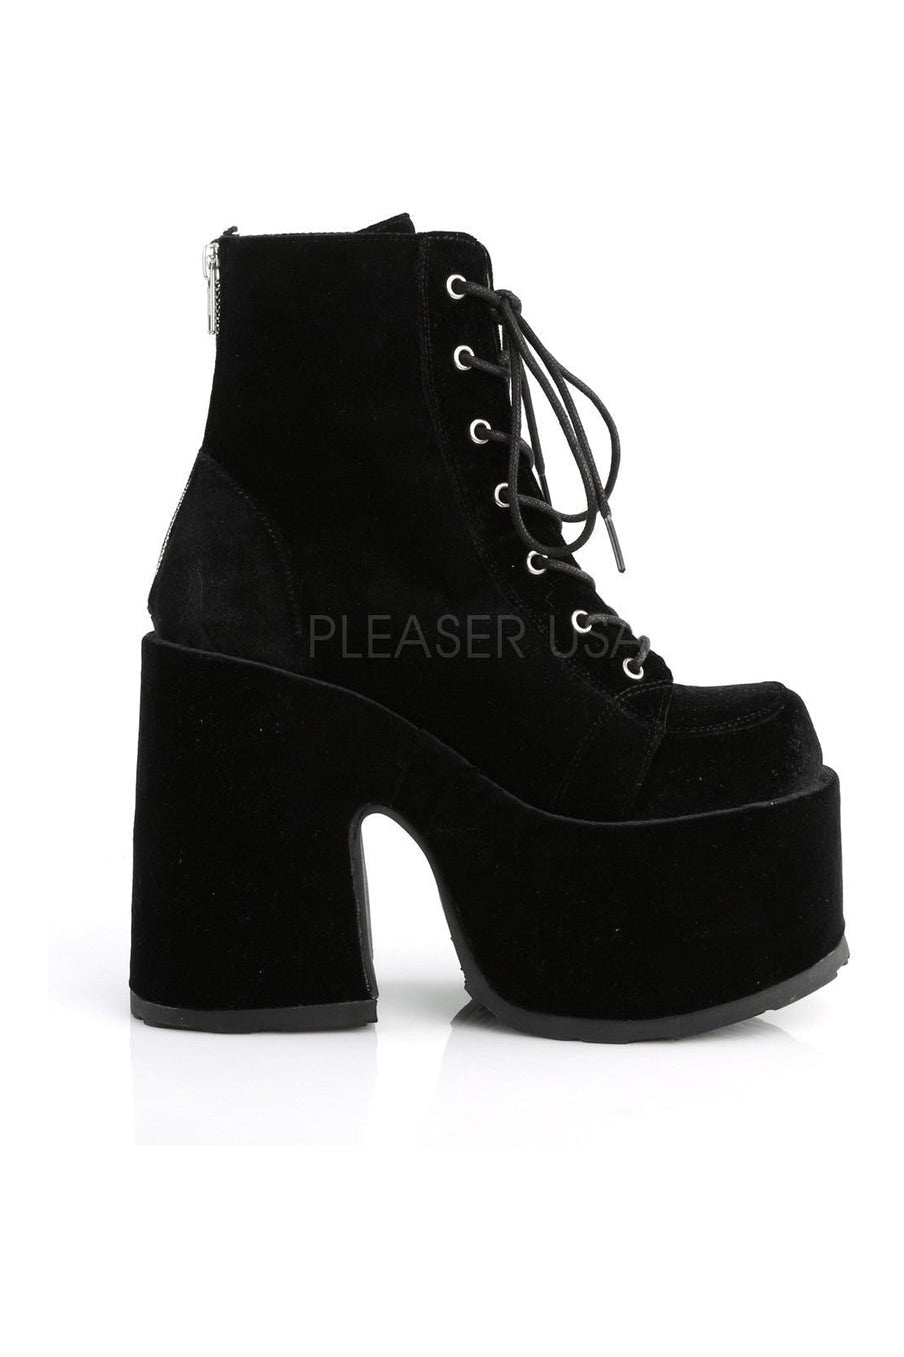 CAMEL-203 Demonia Ankle Boot | Black Velvet-Demonia-Ankle Boots-SEXYSHOES.COM